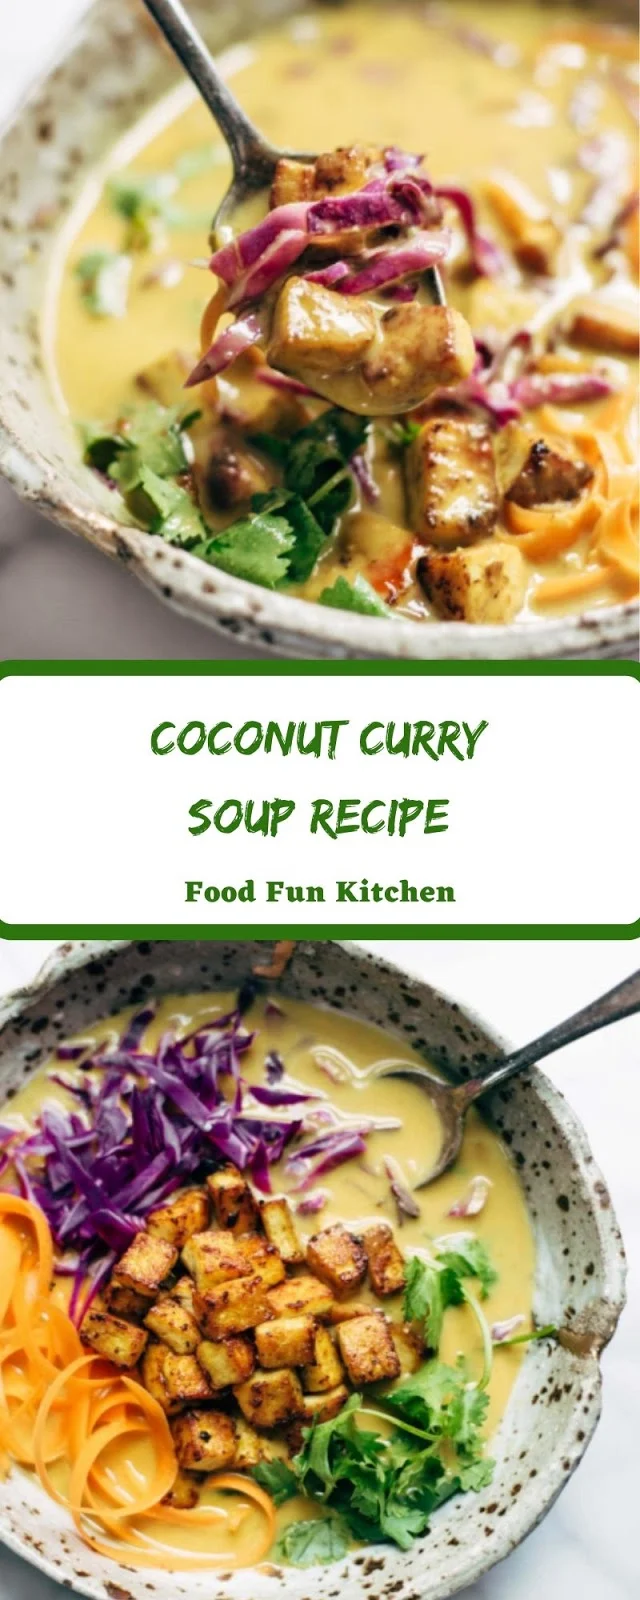 COCONUT CURRY SOUP RECIPE